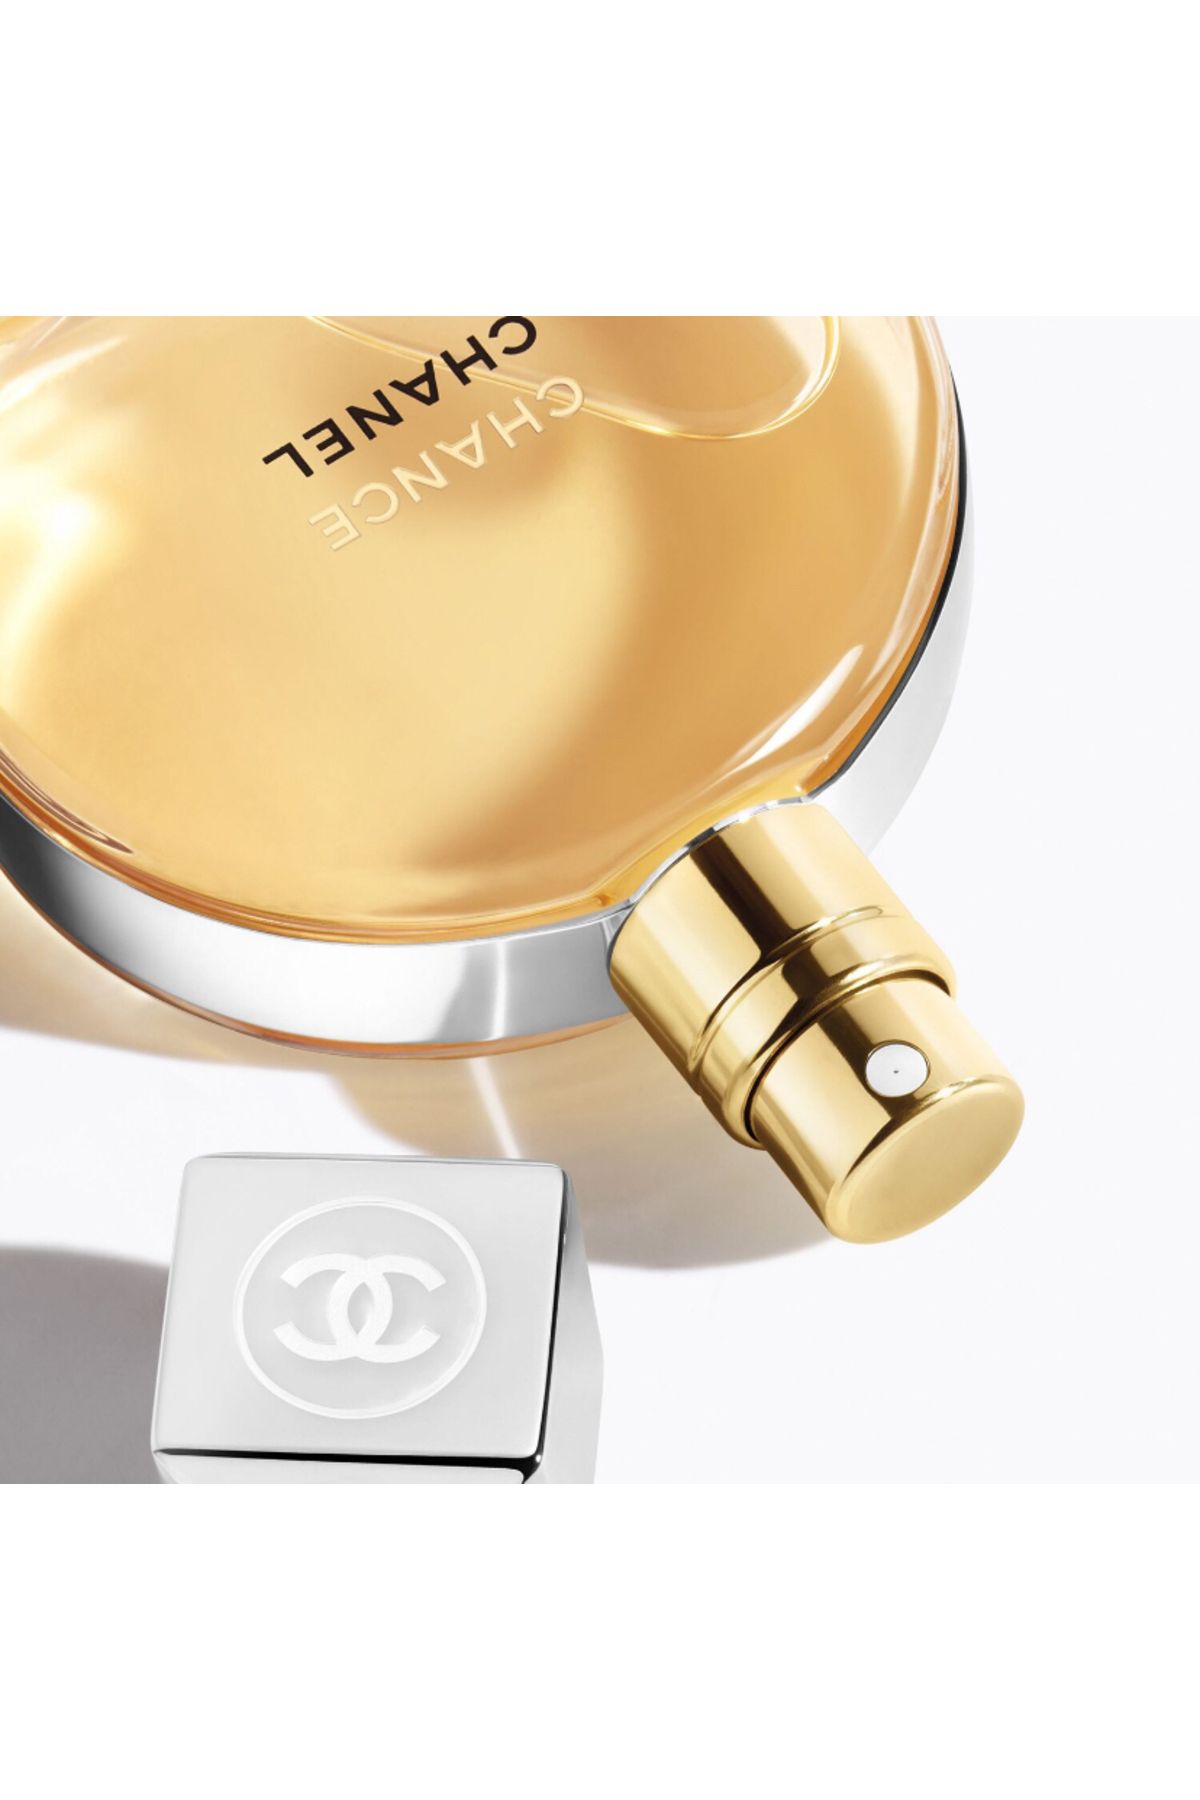 Chanel CHANCE EDP Kadın Parfüm 35Ml Pinkestcosmetics